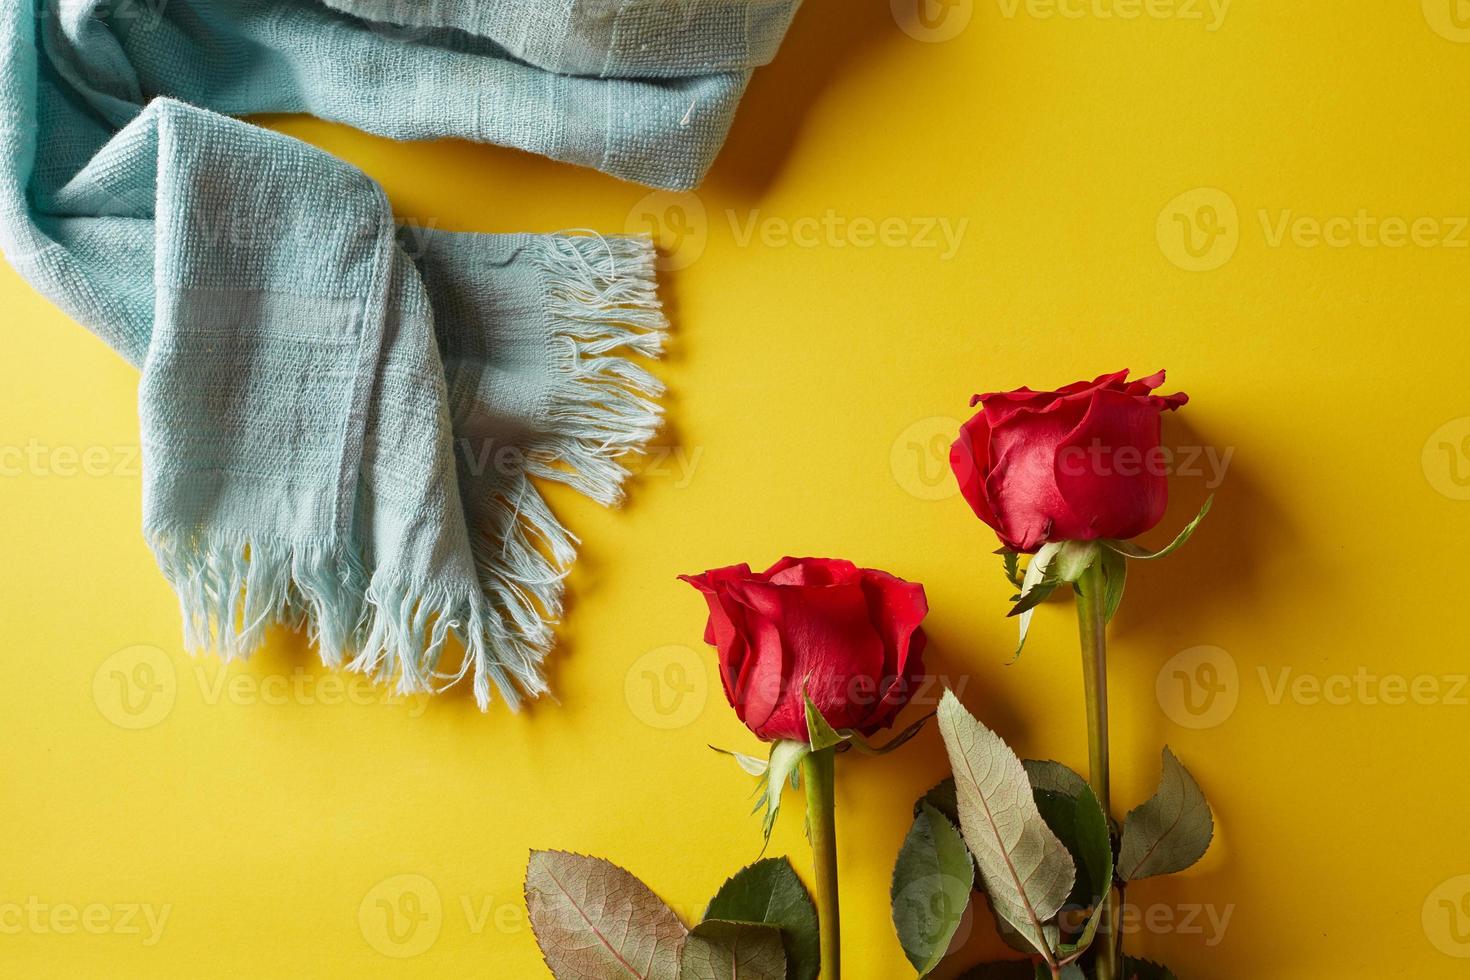 rosor på en gul bakgrund foto